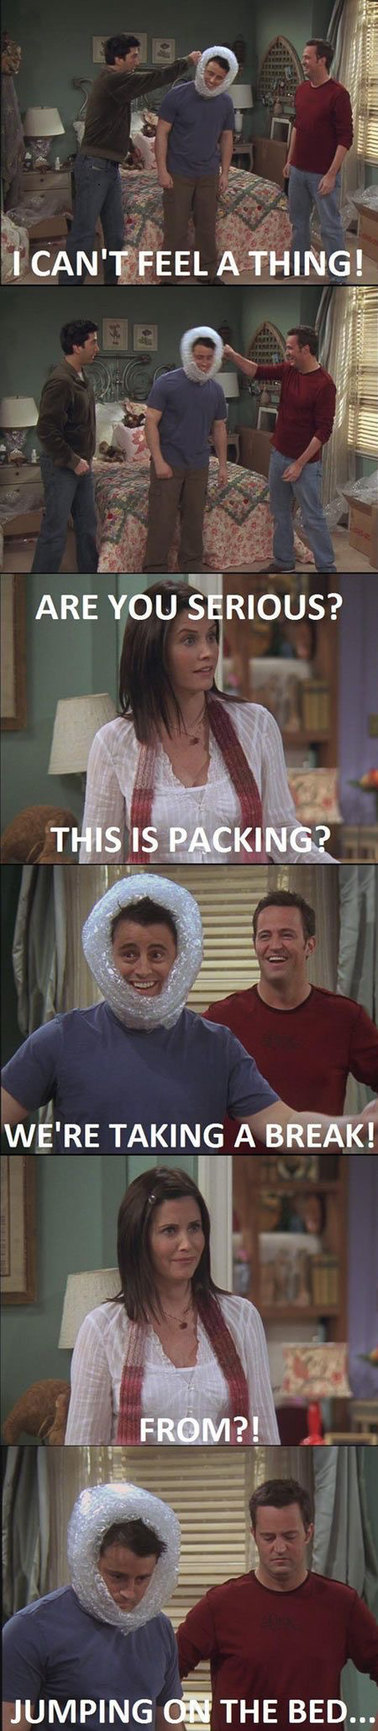 Packing - meme